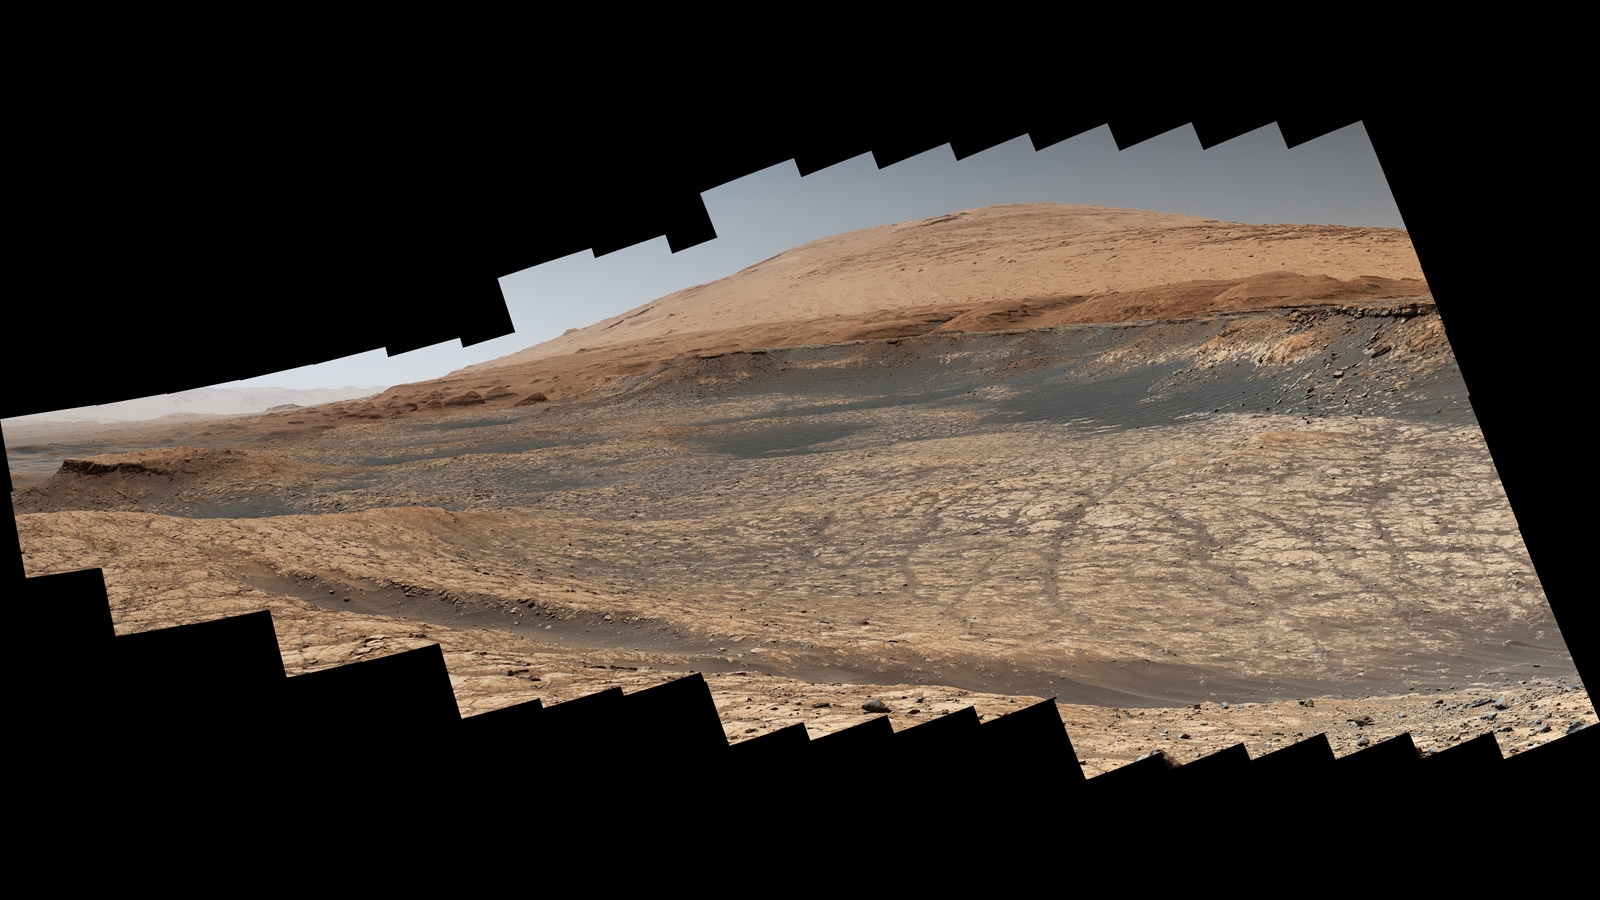 Curiosity rover starts its 'summer trip' to next Martian destination | DeviceDaily.com